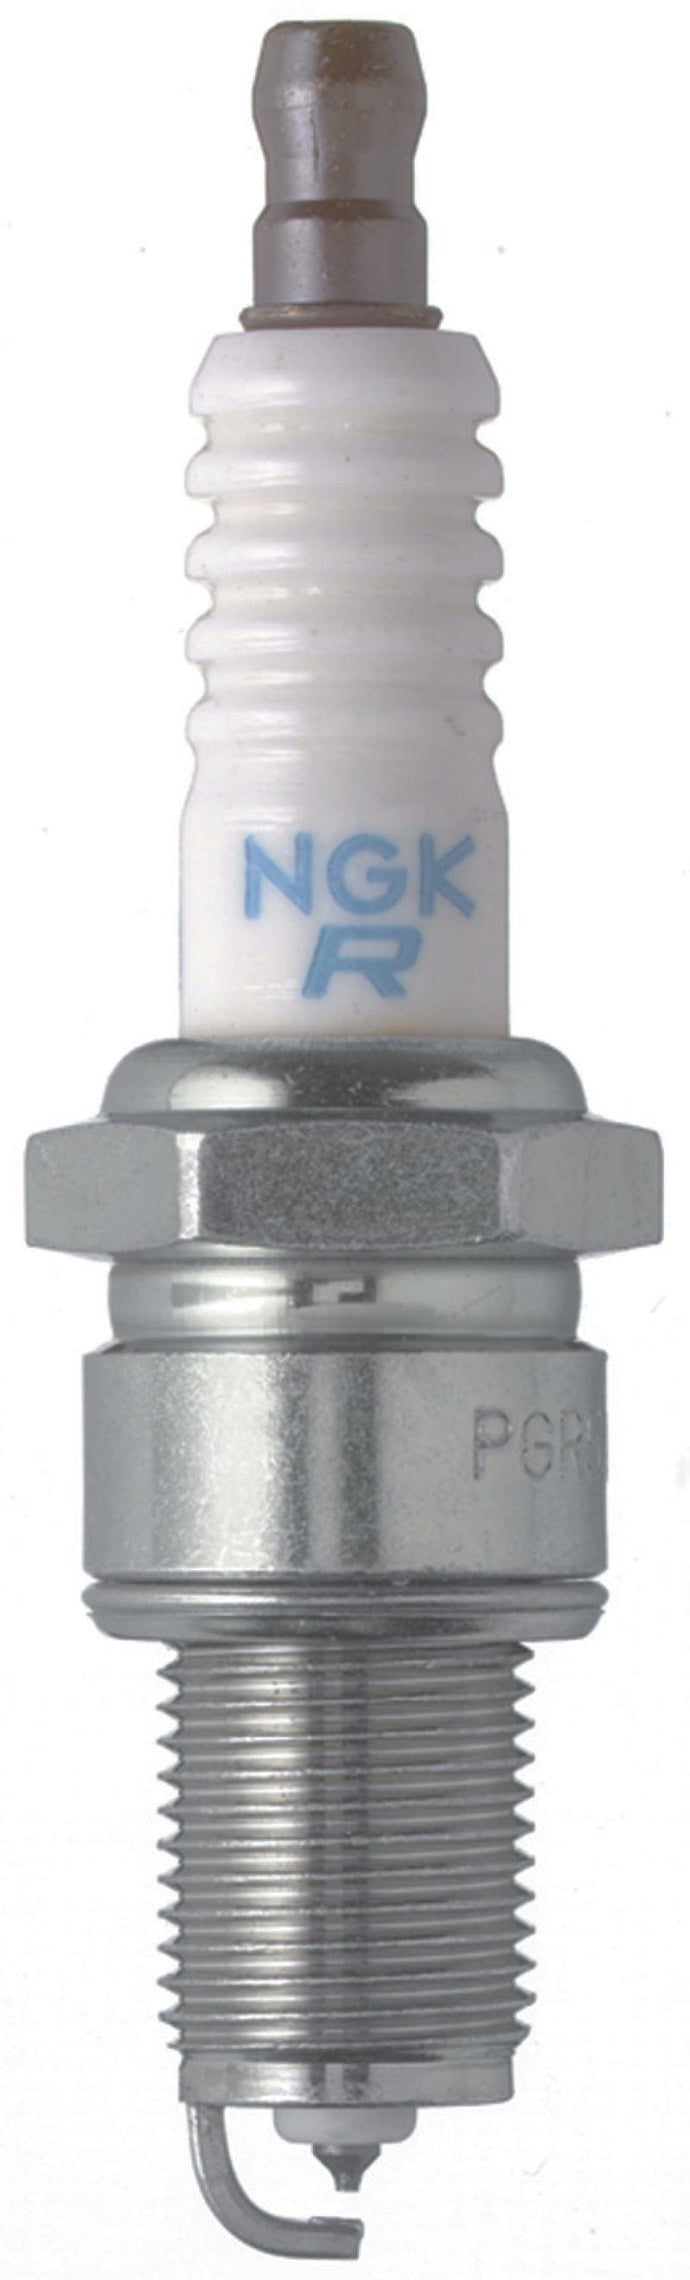 NGK NGK3573